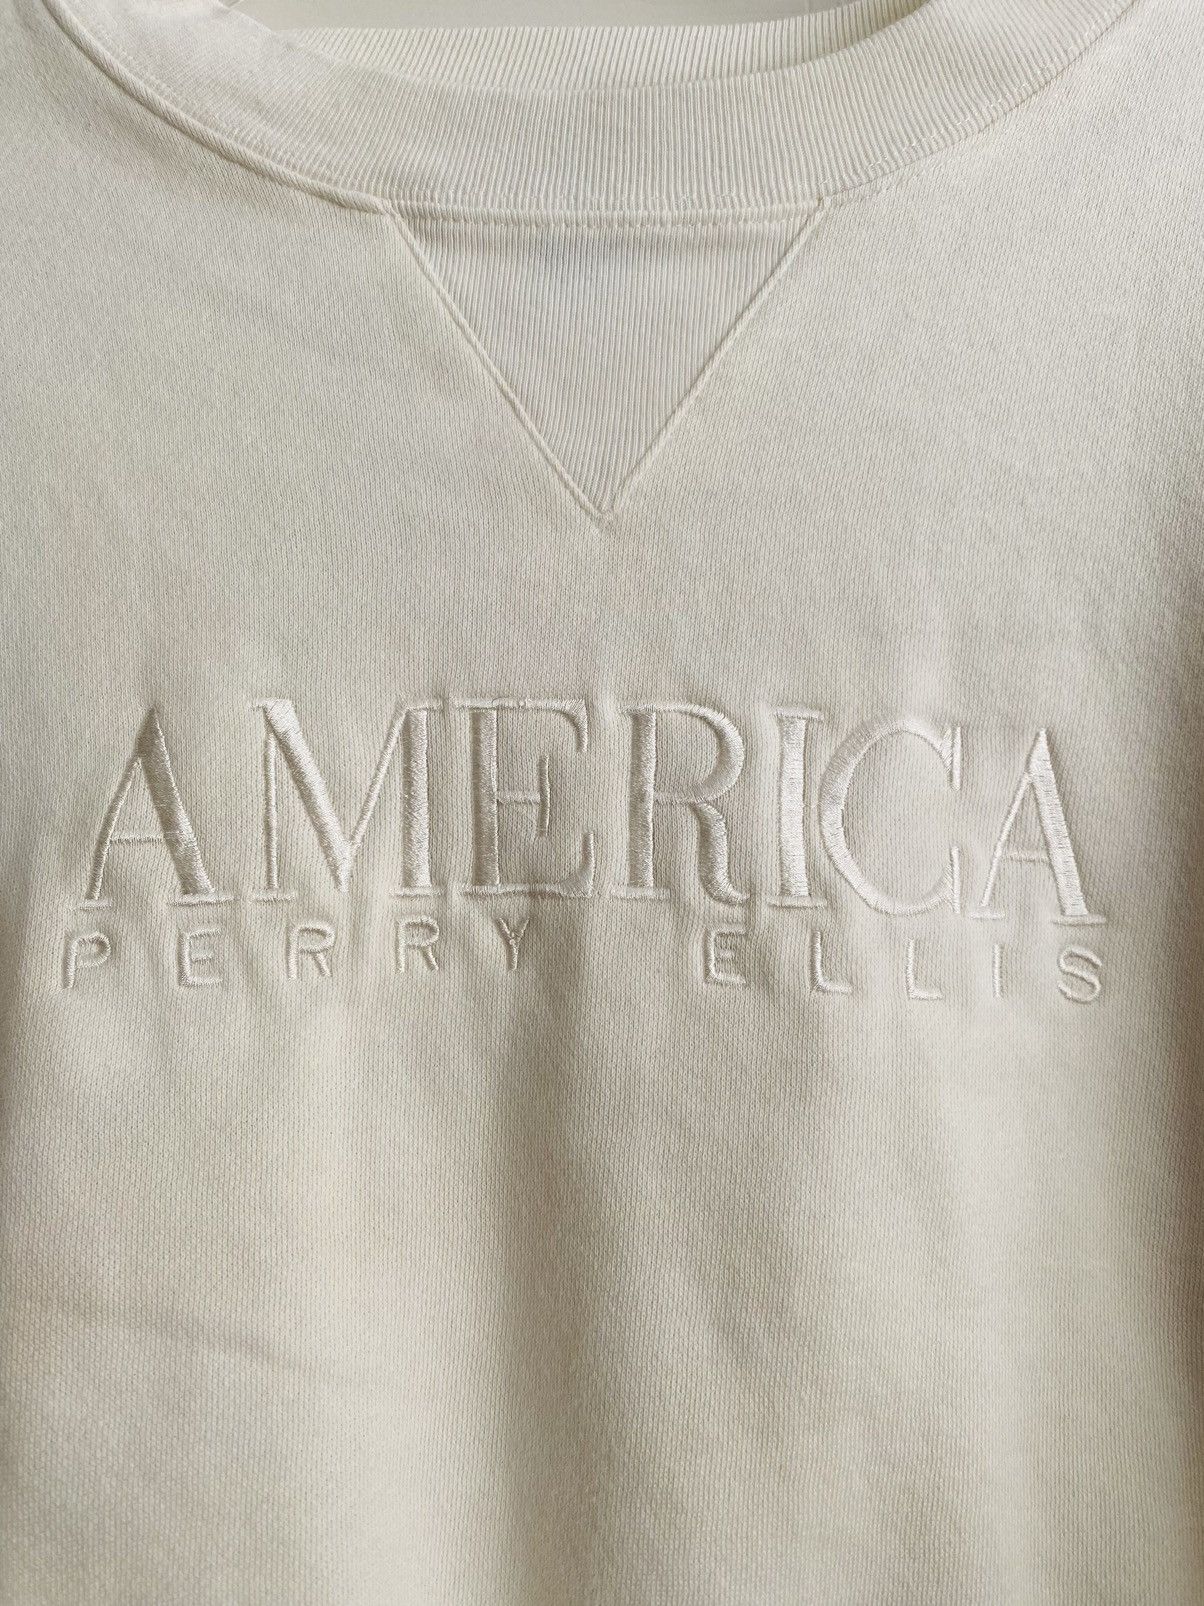 Vintage Rare Vintage PERRY ELLIS America Spell Out Sweatshirt 90s Size US L / EU 52-54 / 3 - 3 Thumbnail